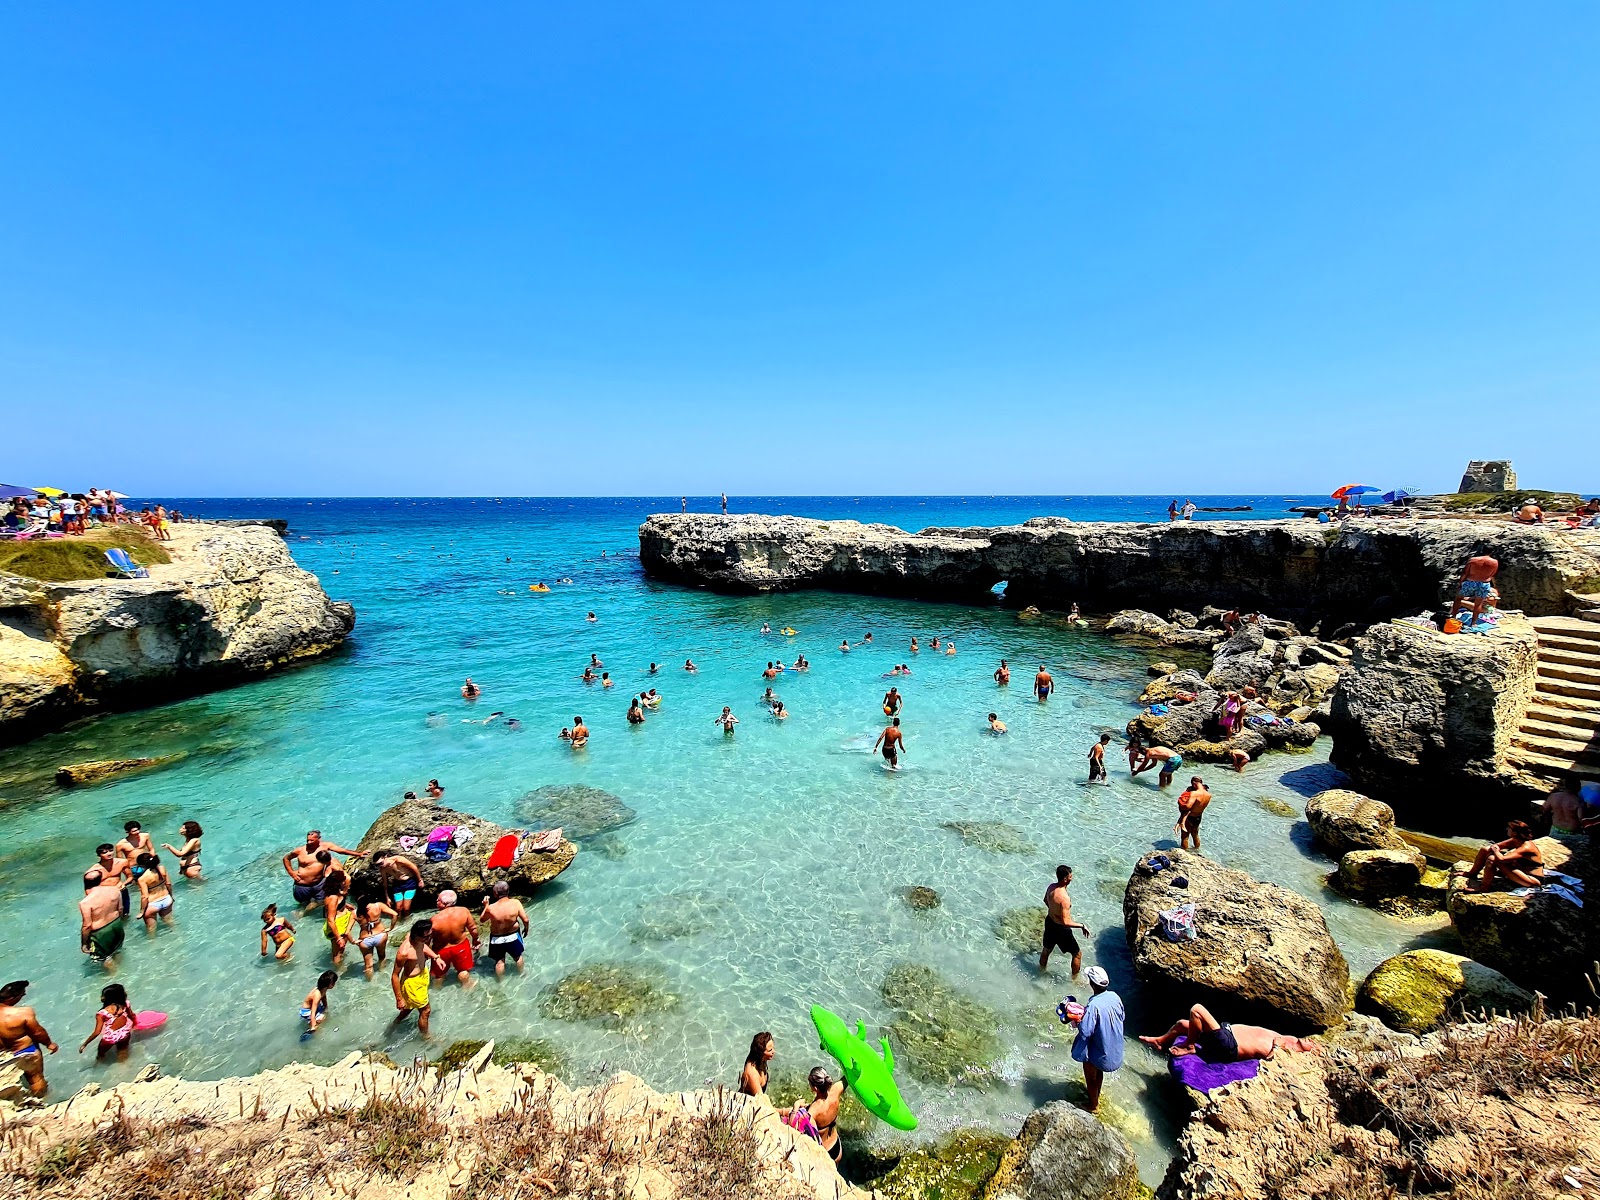 Photo of Spiaggia di Portulignu with rocks cover surface